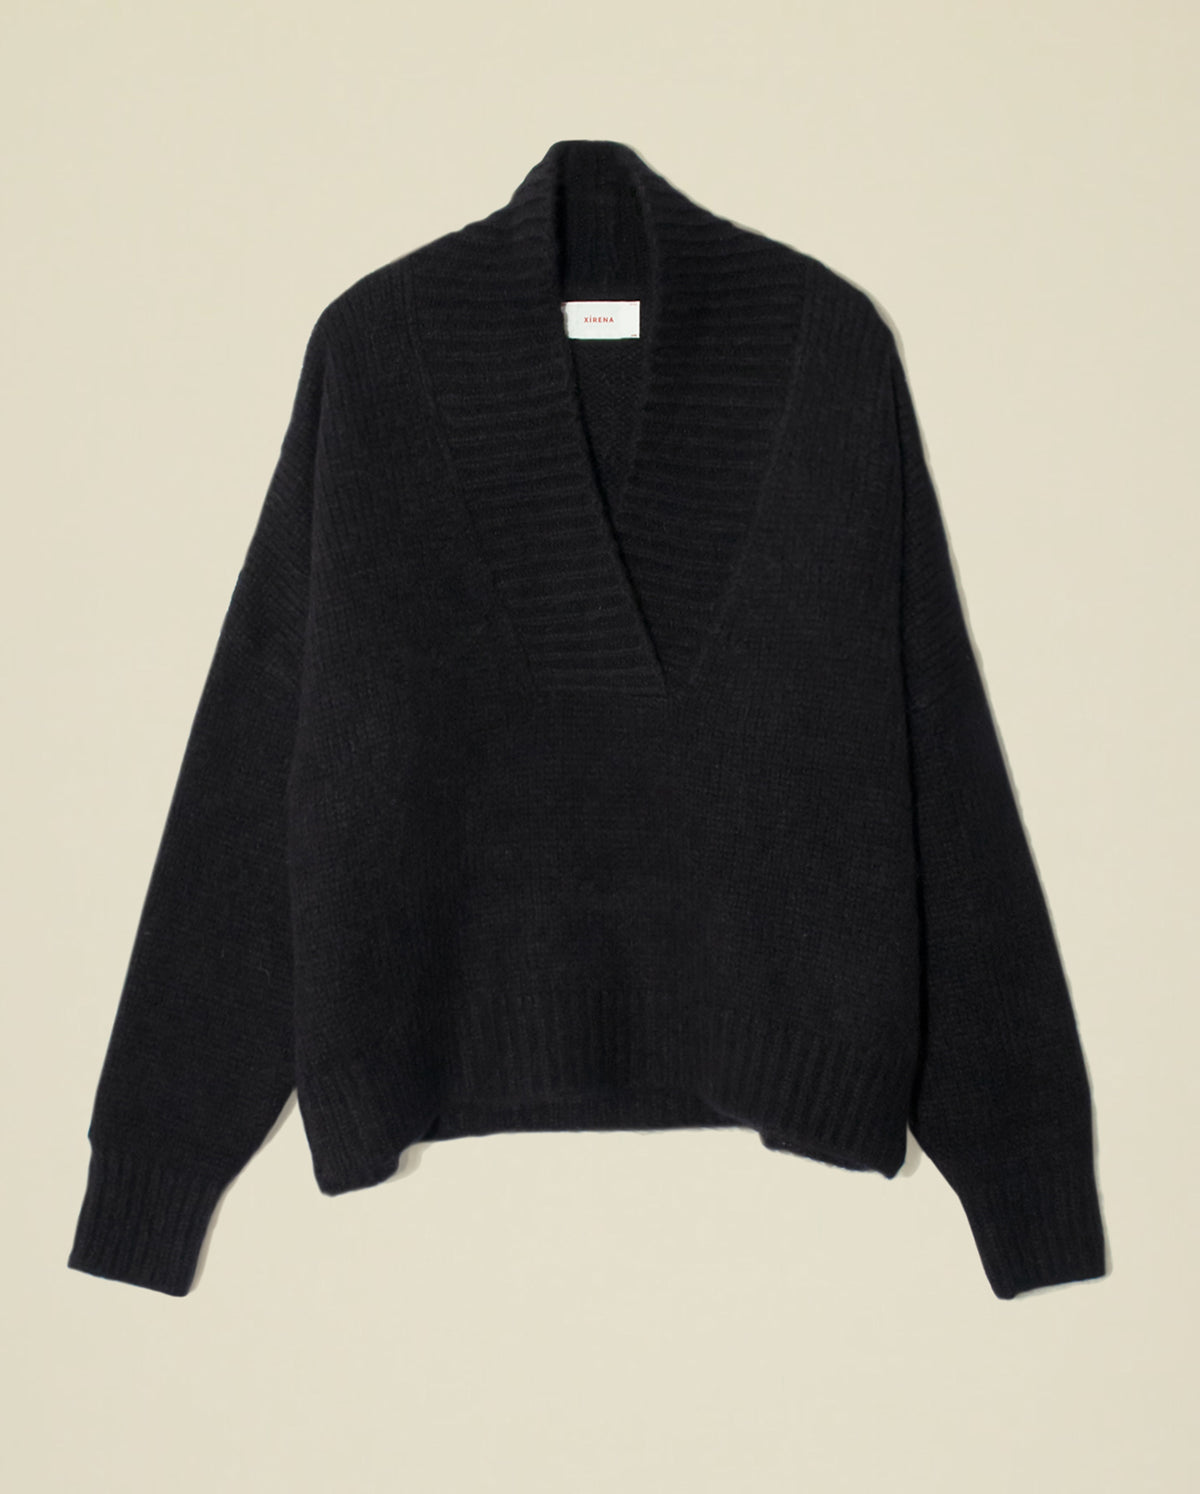 Keyes Sweater - Black